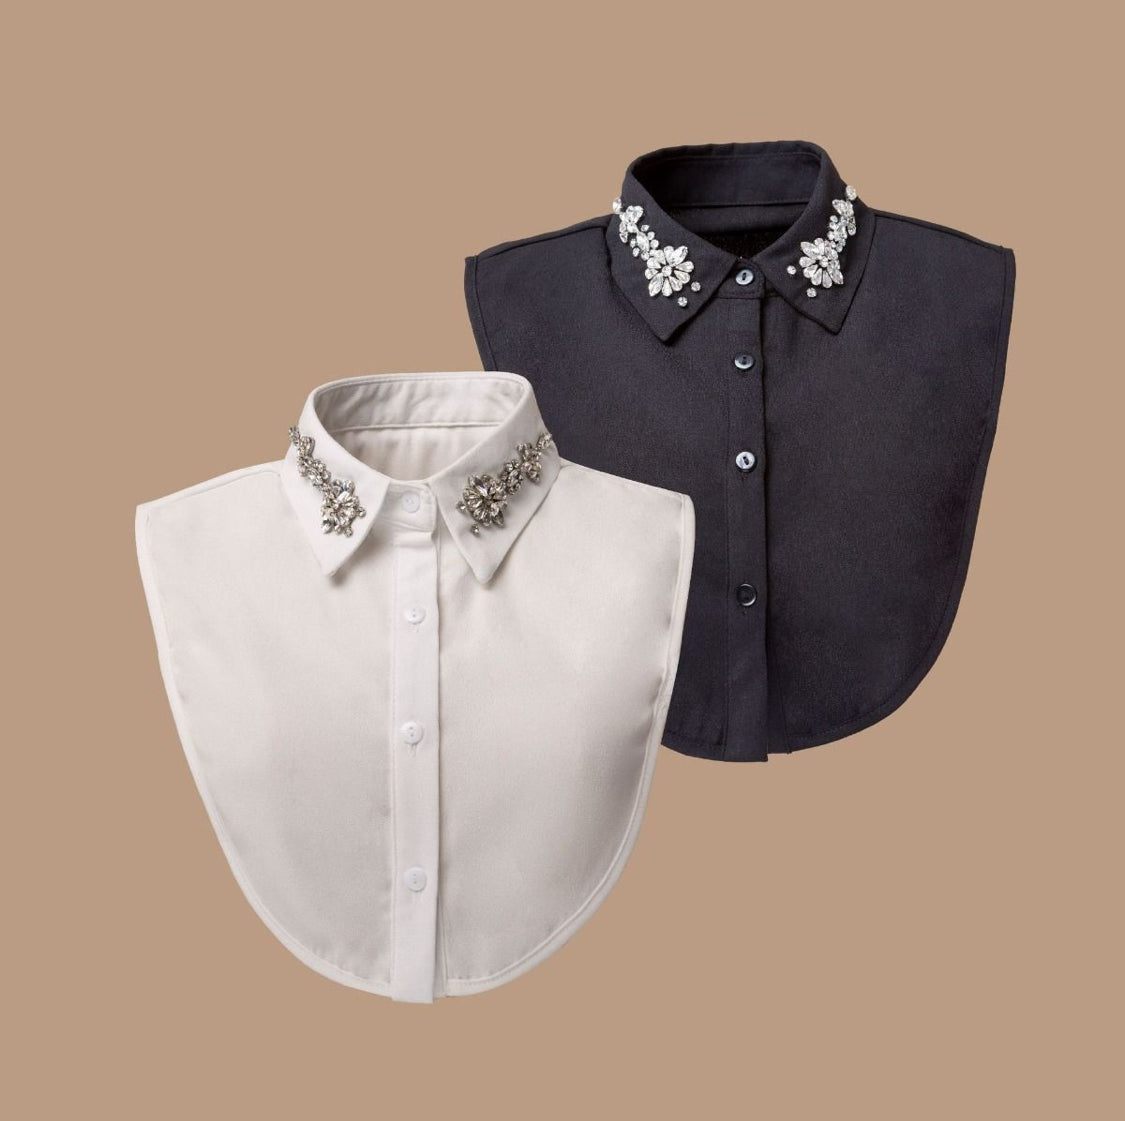 Detachable False Shirt Collars - Black with Crystals